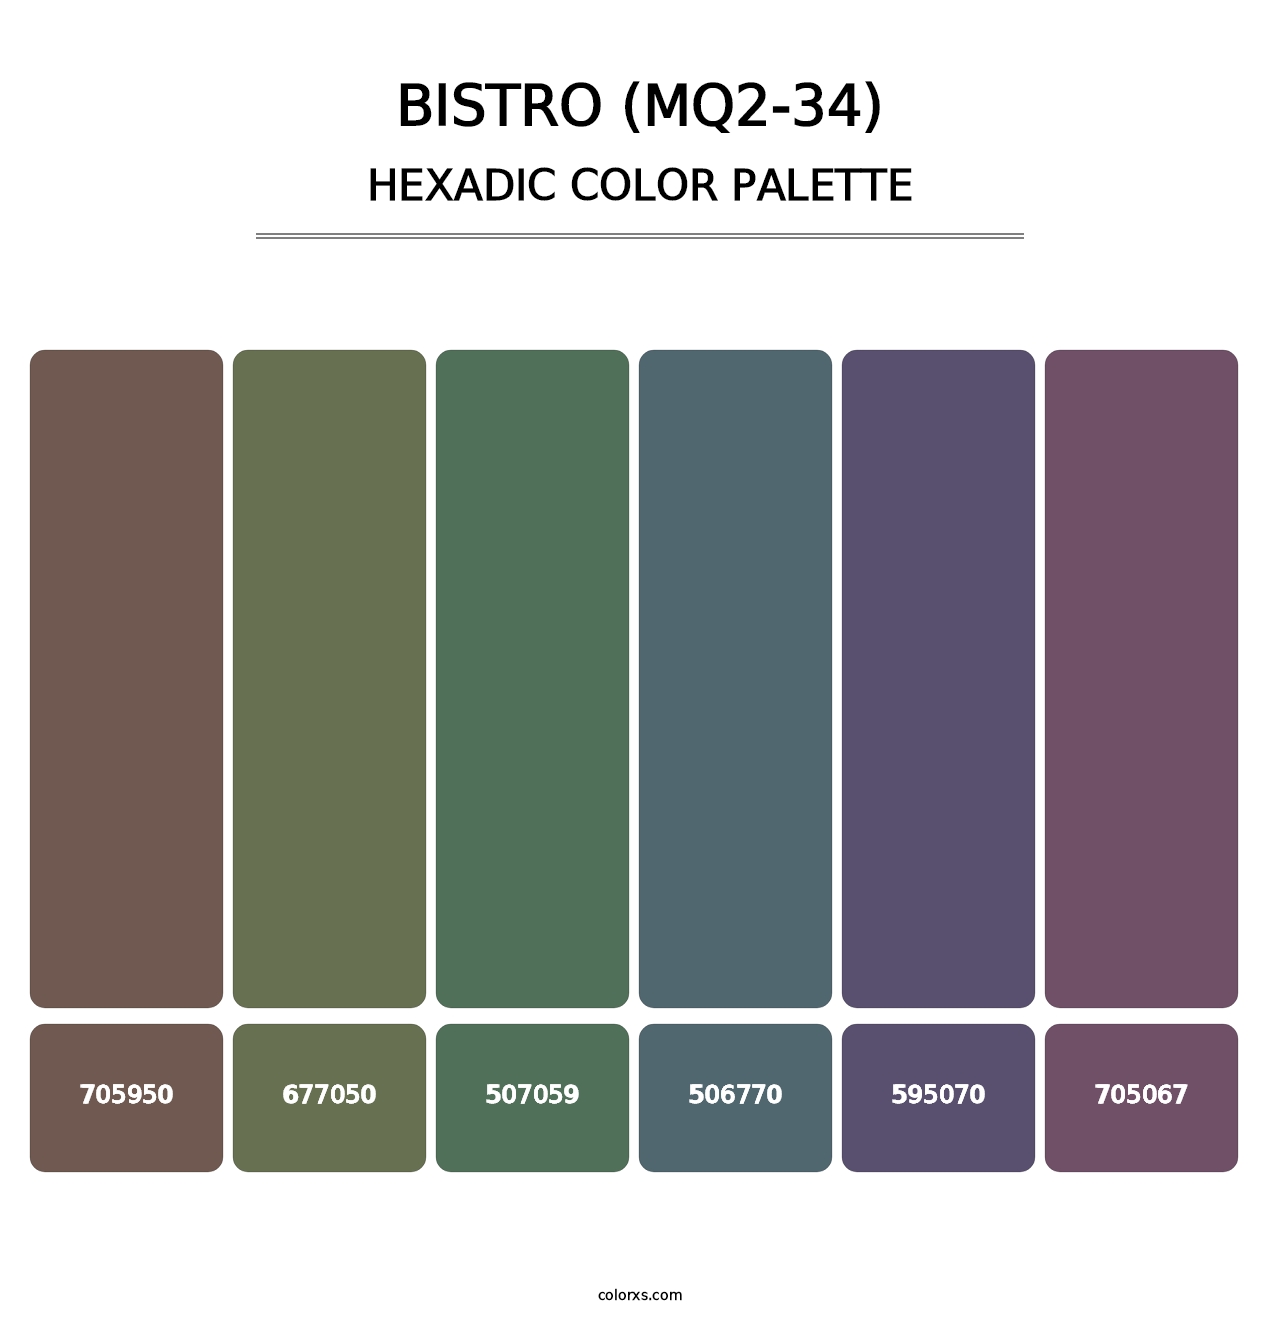 Bistro (MQ2-34) - Hexadic Color Palette